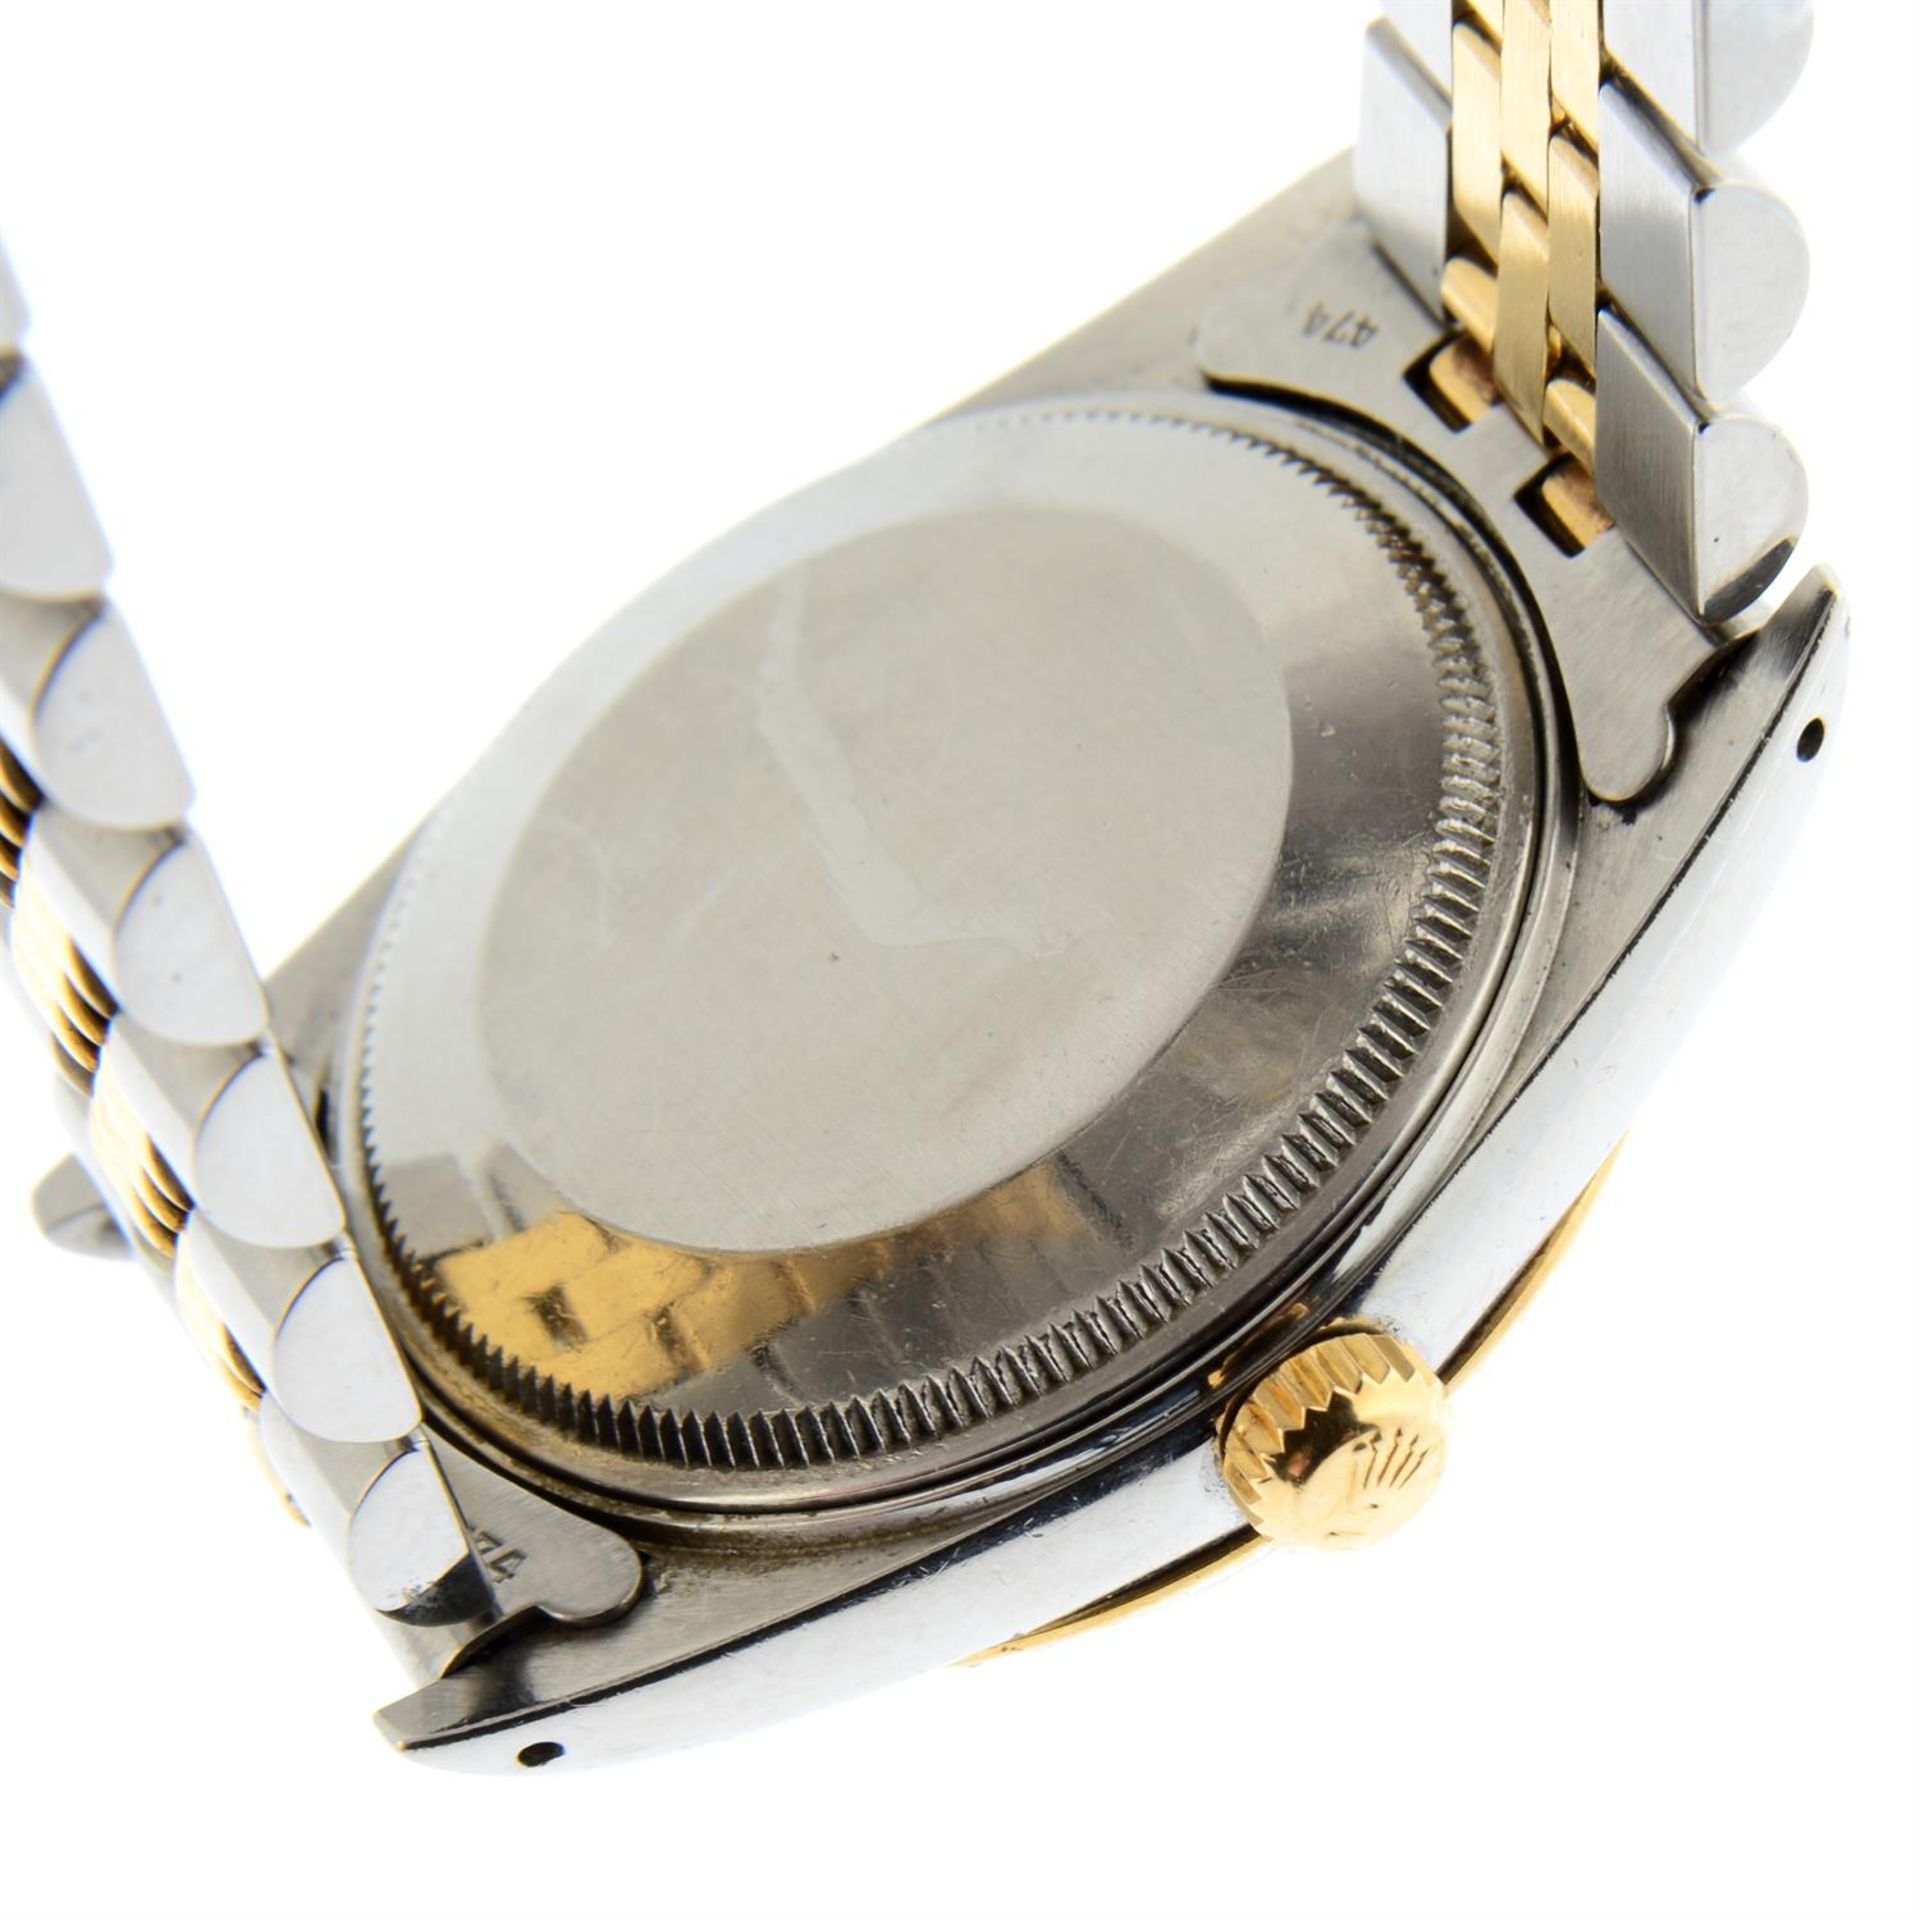 ROLEX - a bi-metal Oyster Perpetual Date bracelet watch, 34mm. - Image 2 of 5